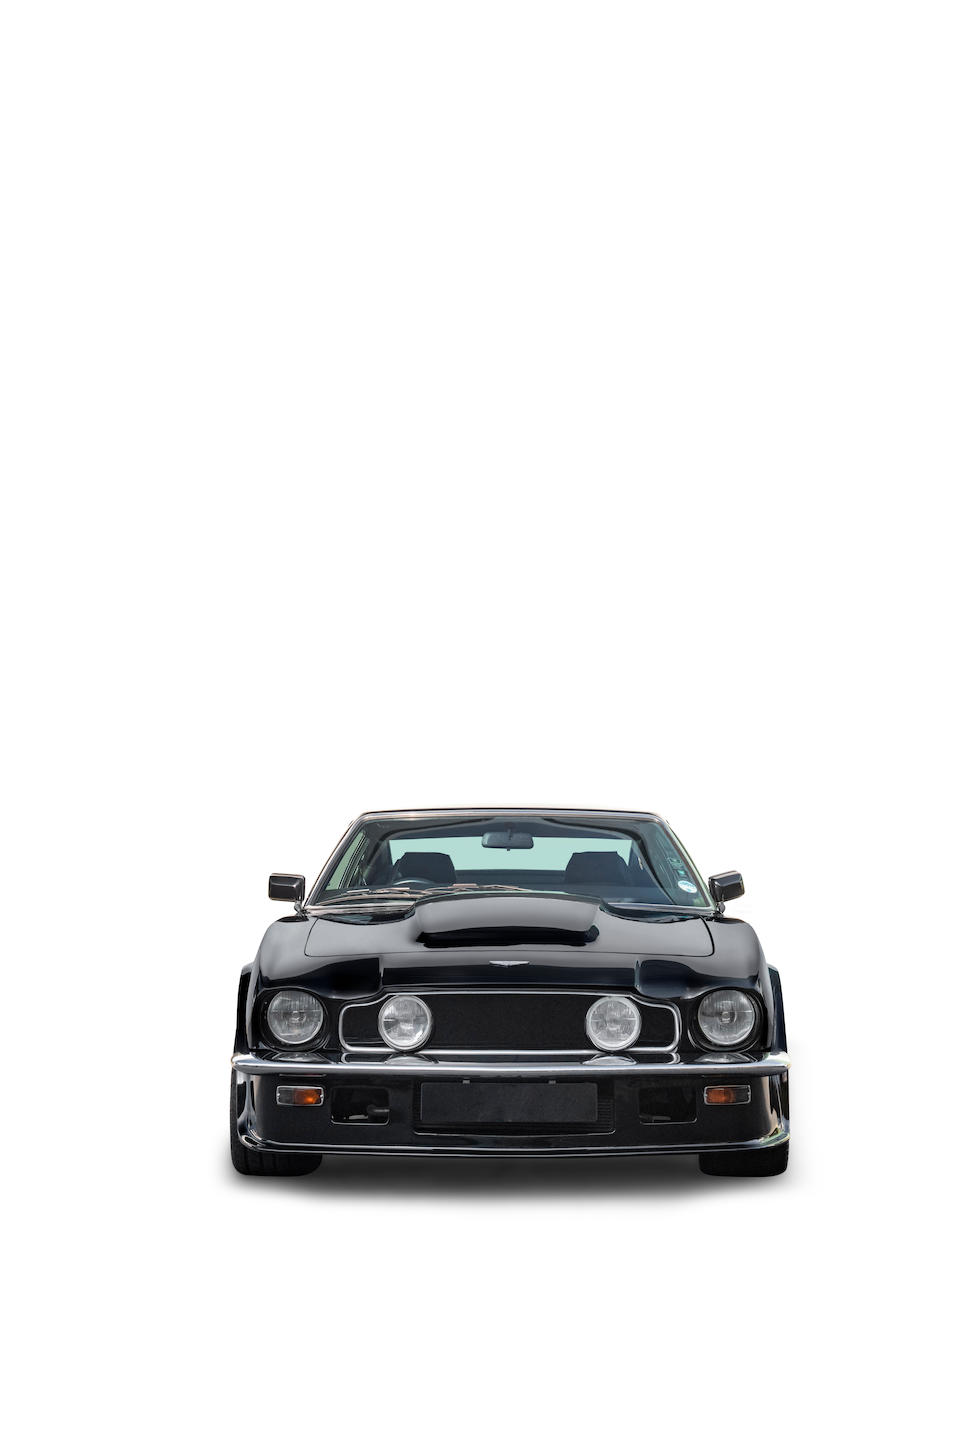 1988 Aston Martin V8 Vantage X-Pack Sports Saloon  Chassis no. SCFCV8IV7JTR12603